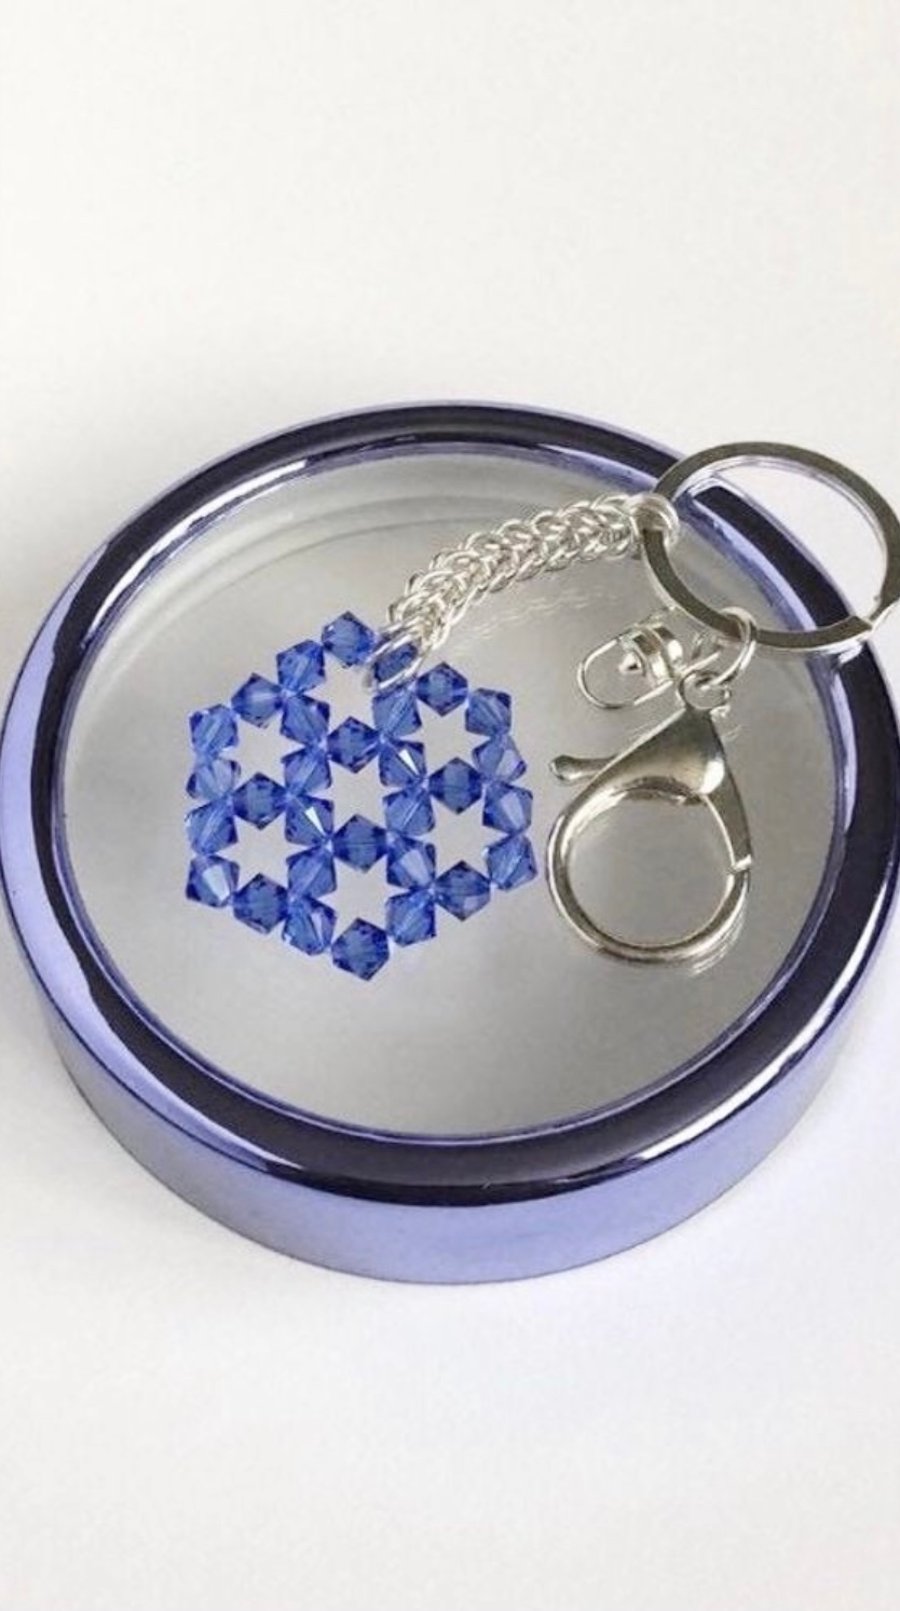 Hexagonal Blue Swarovski Crystal Handbag Charm